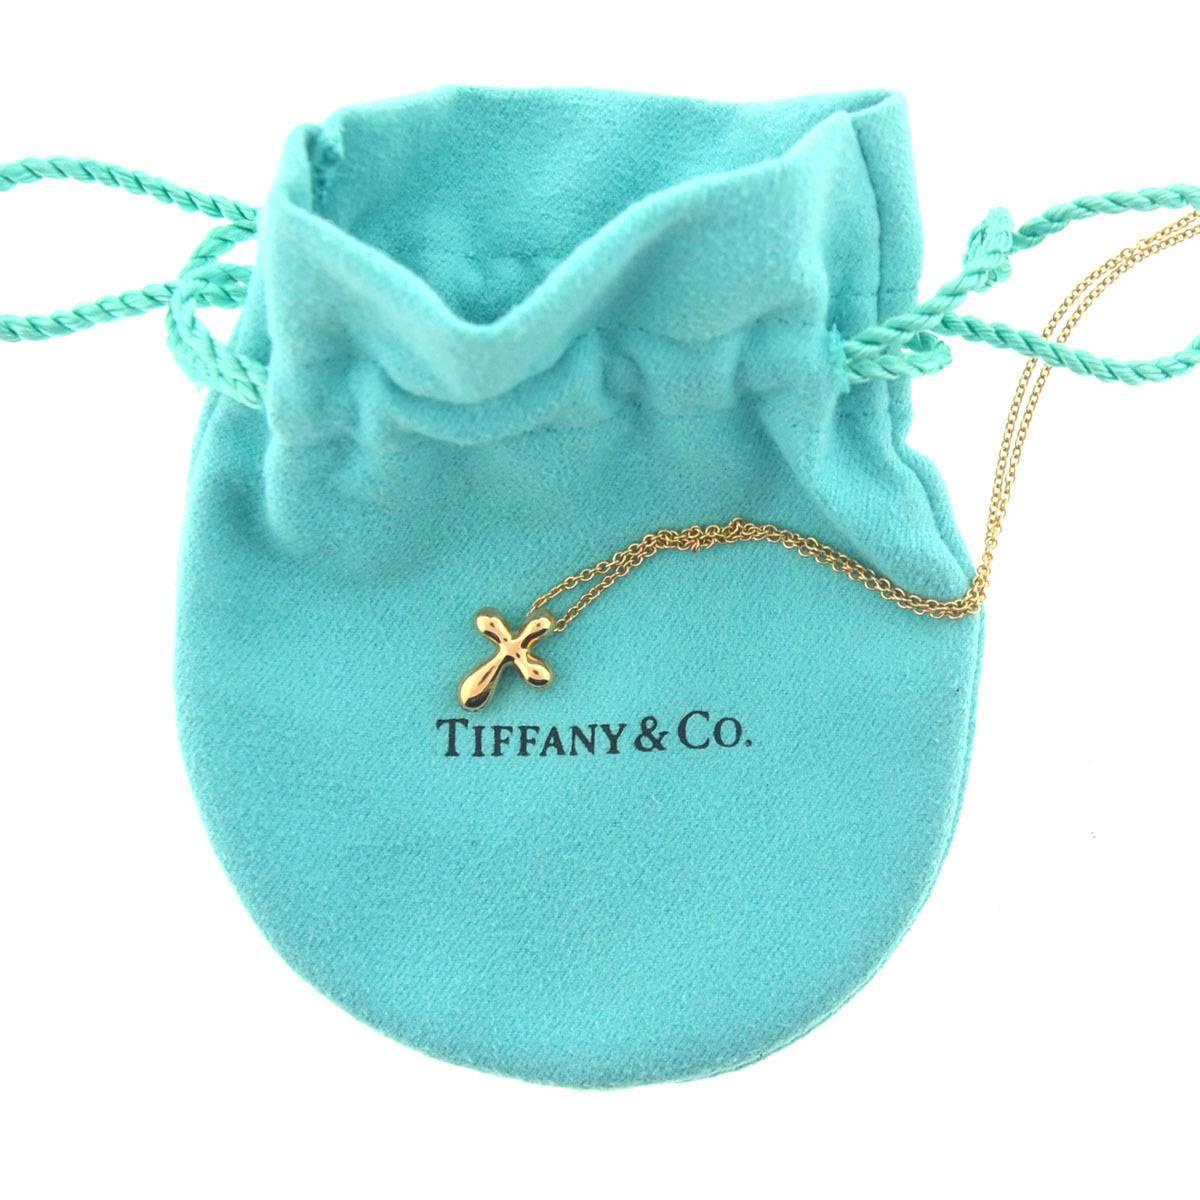 Company - Tiffany & Co
Style - Elsa Peretti Cross Pendant Necklace
Metal - 18k Rose Gold
Chain Length - 16